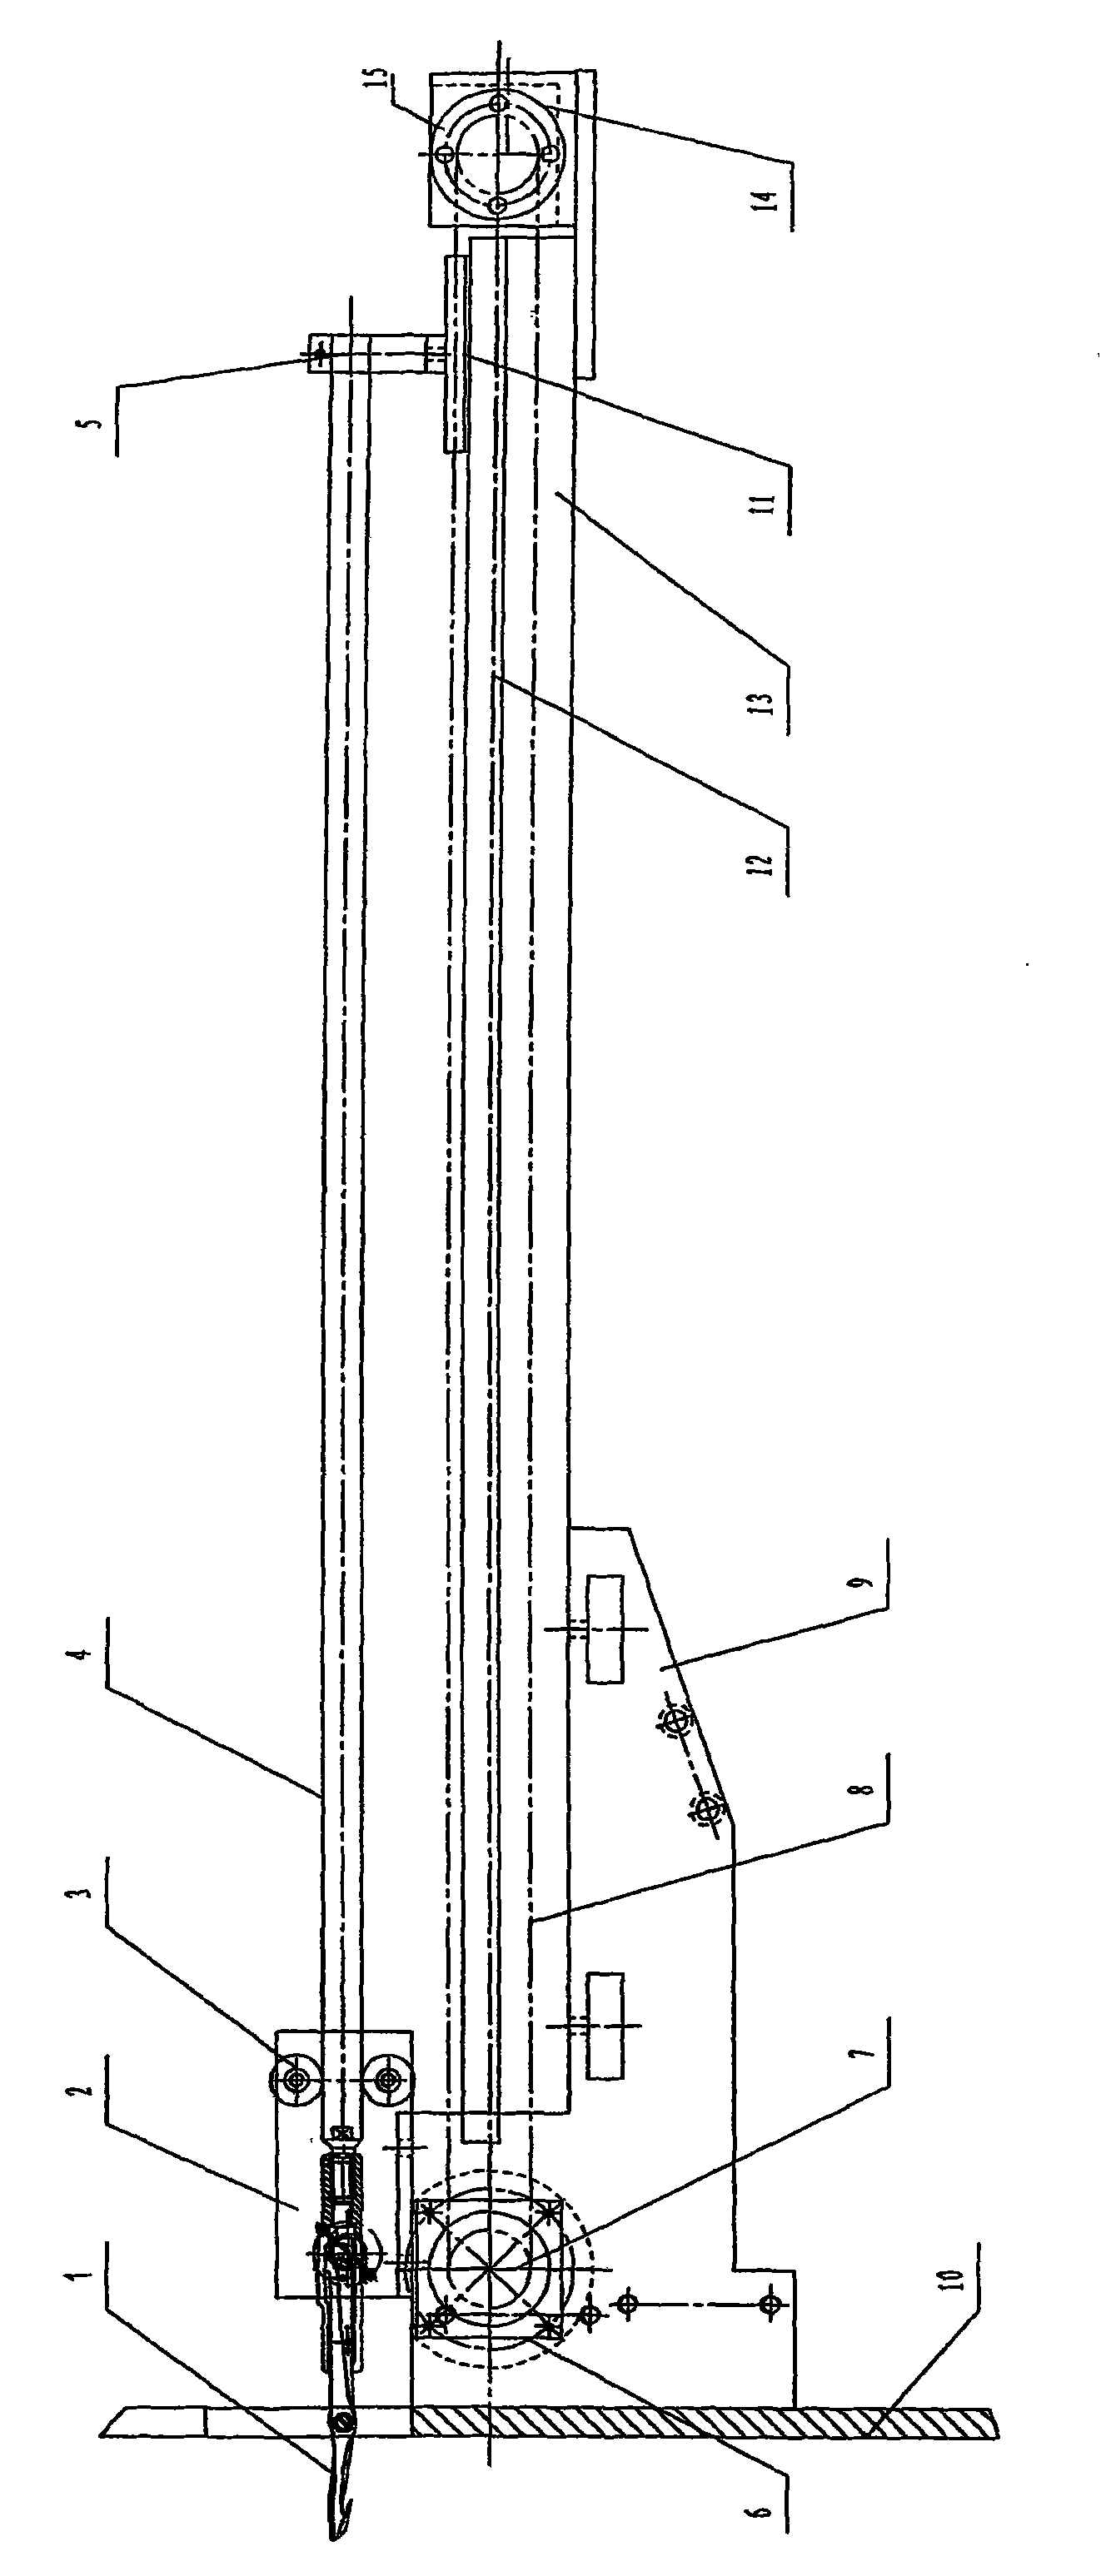 Weft inserting mechanism of sample loom